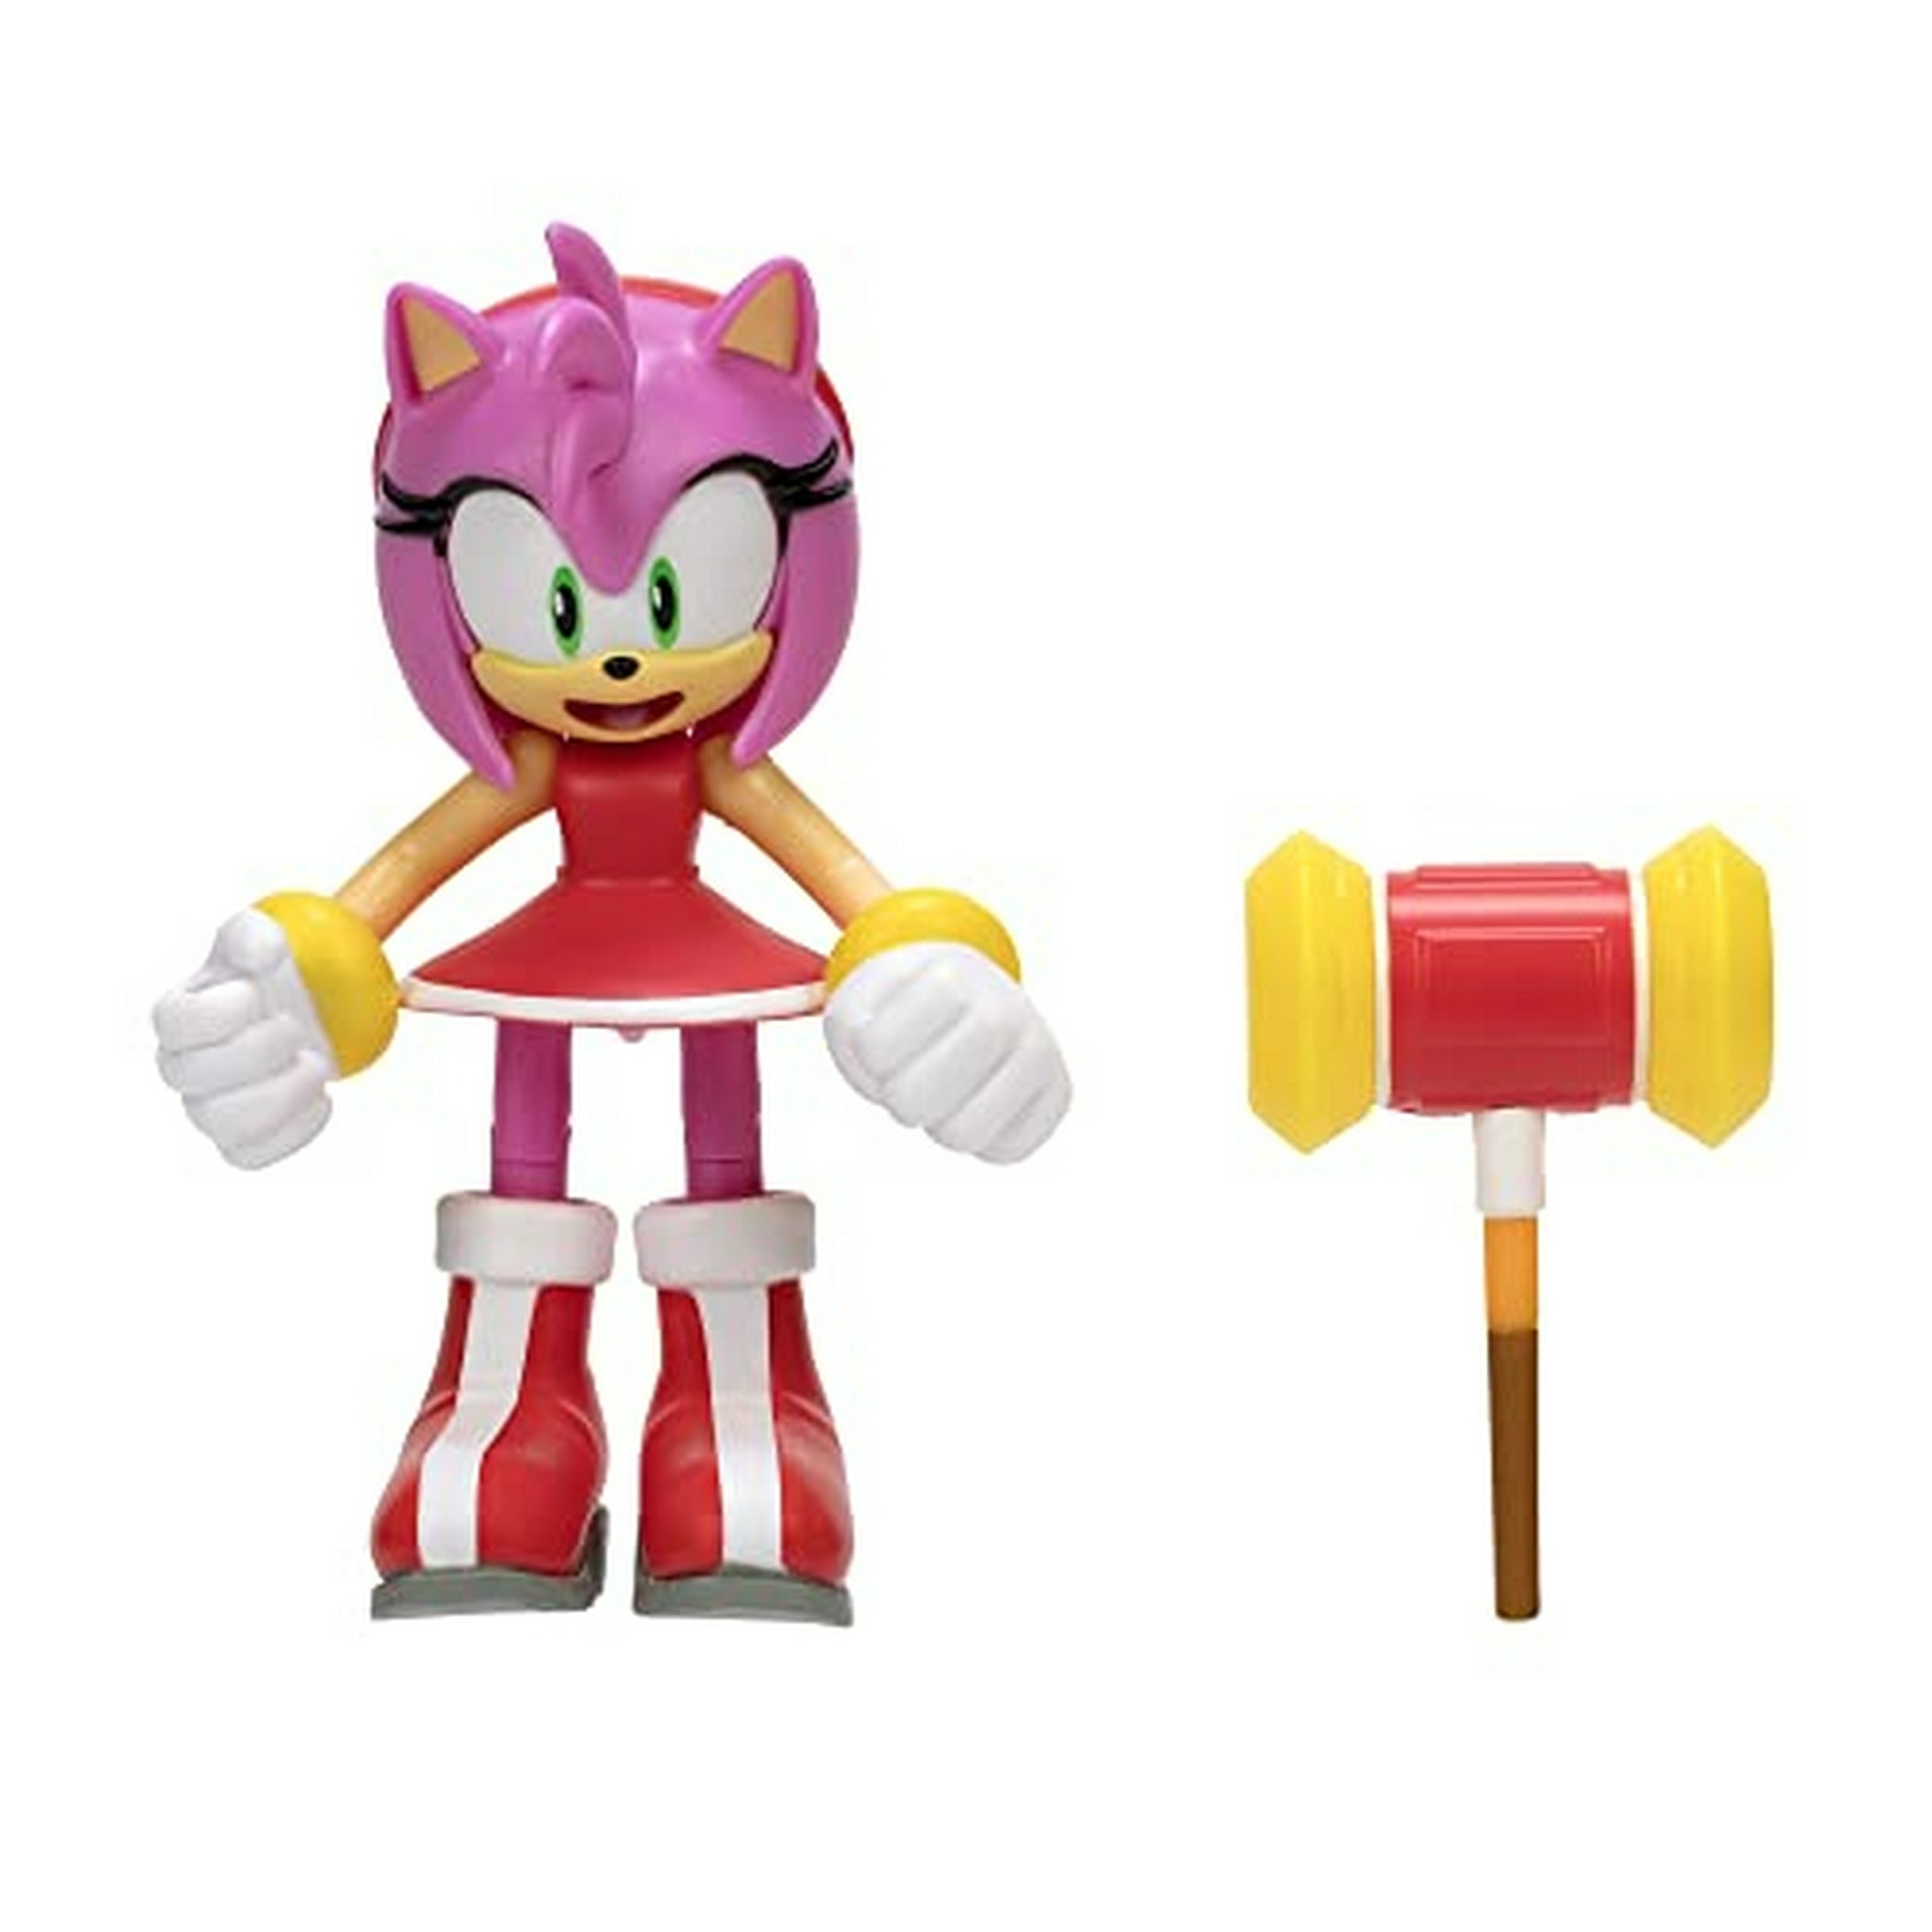  Sonic The Hedgehog Peluche de 9 pulgadas de juguete